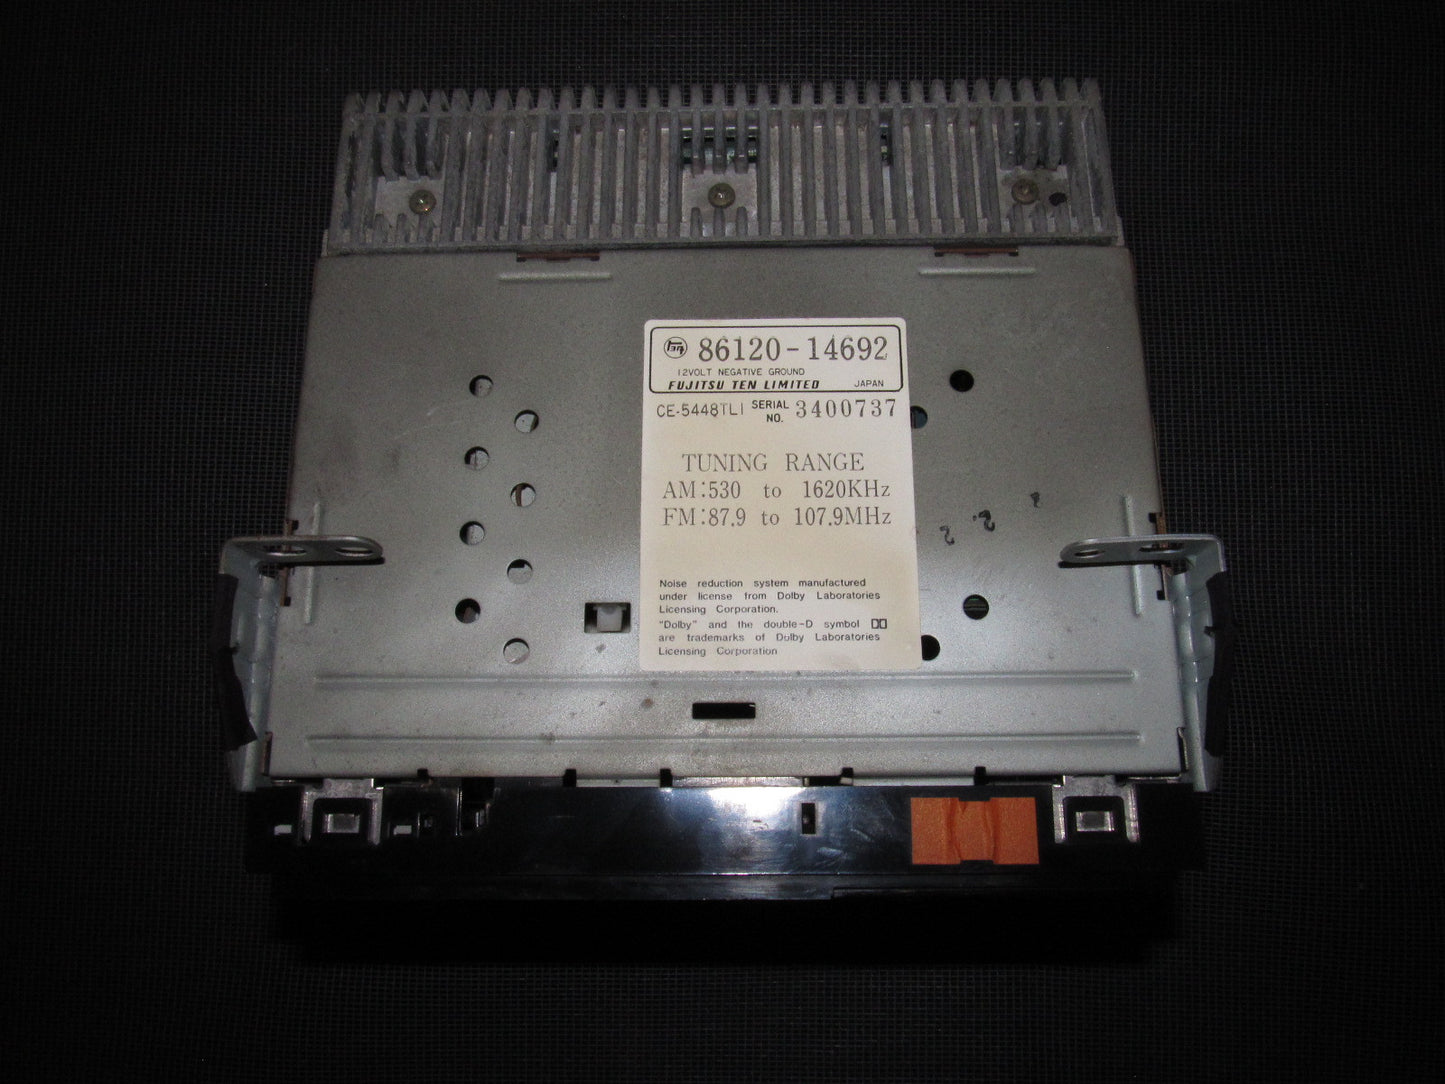 86 87 88 Toyota Supra OEM Radio Cassette Player